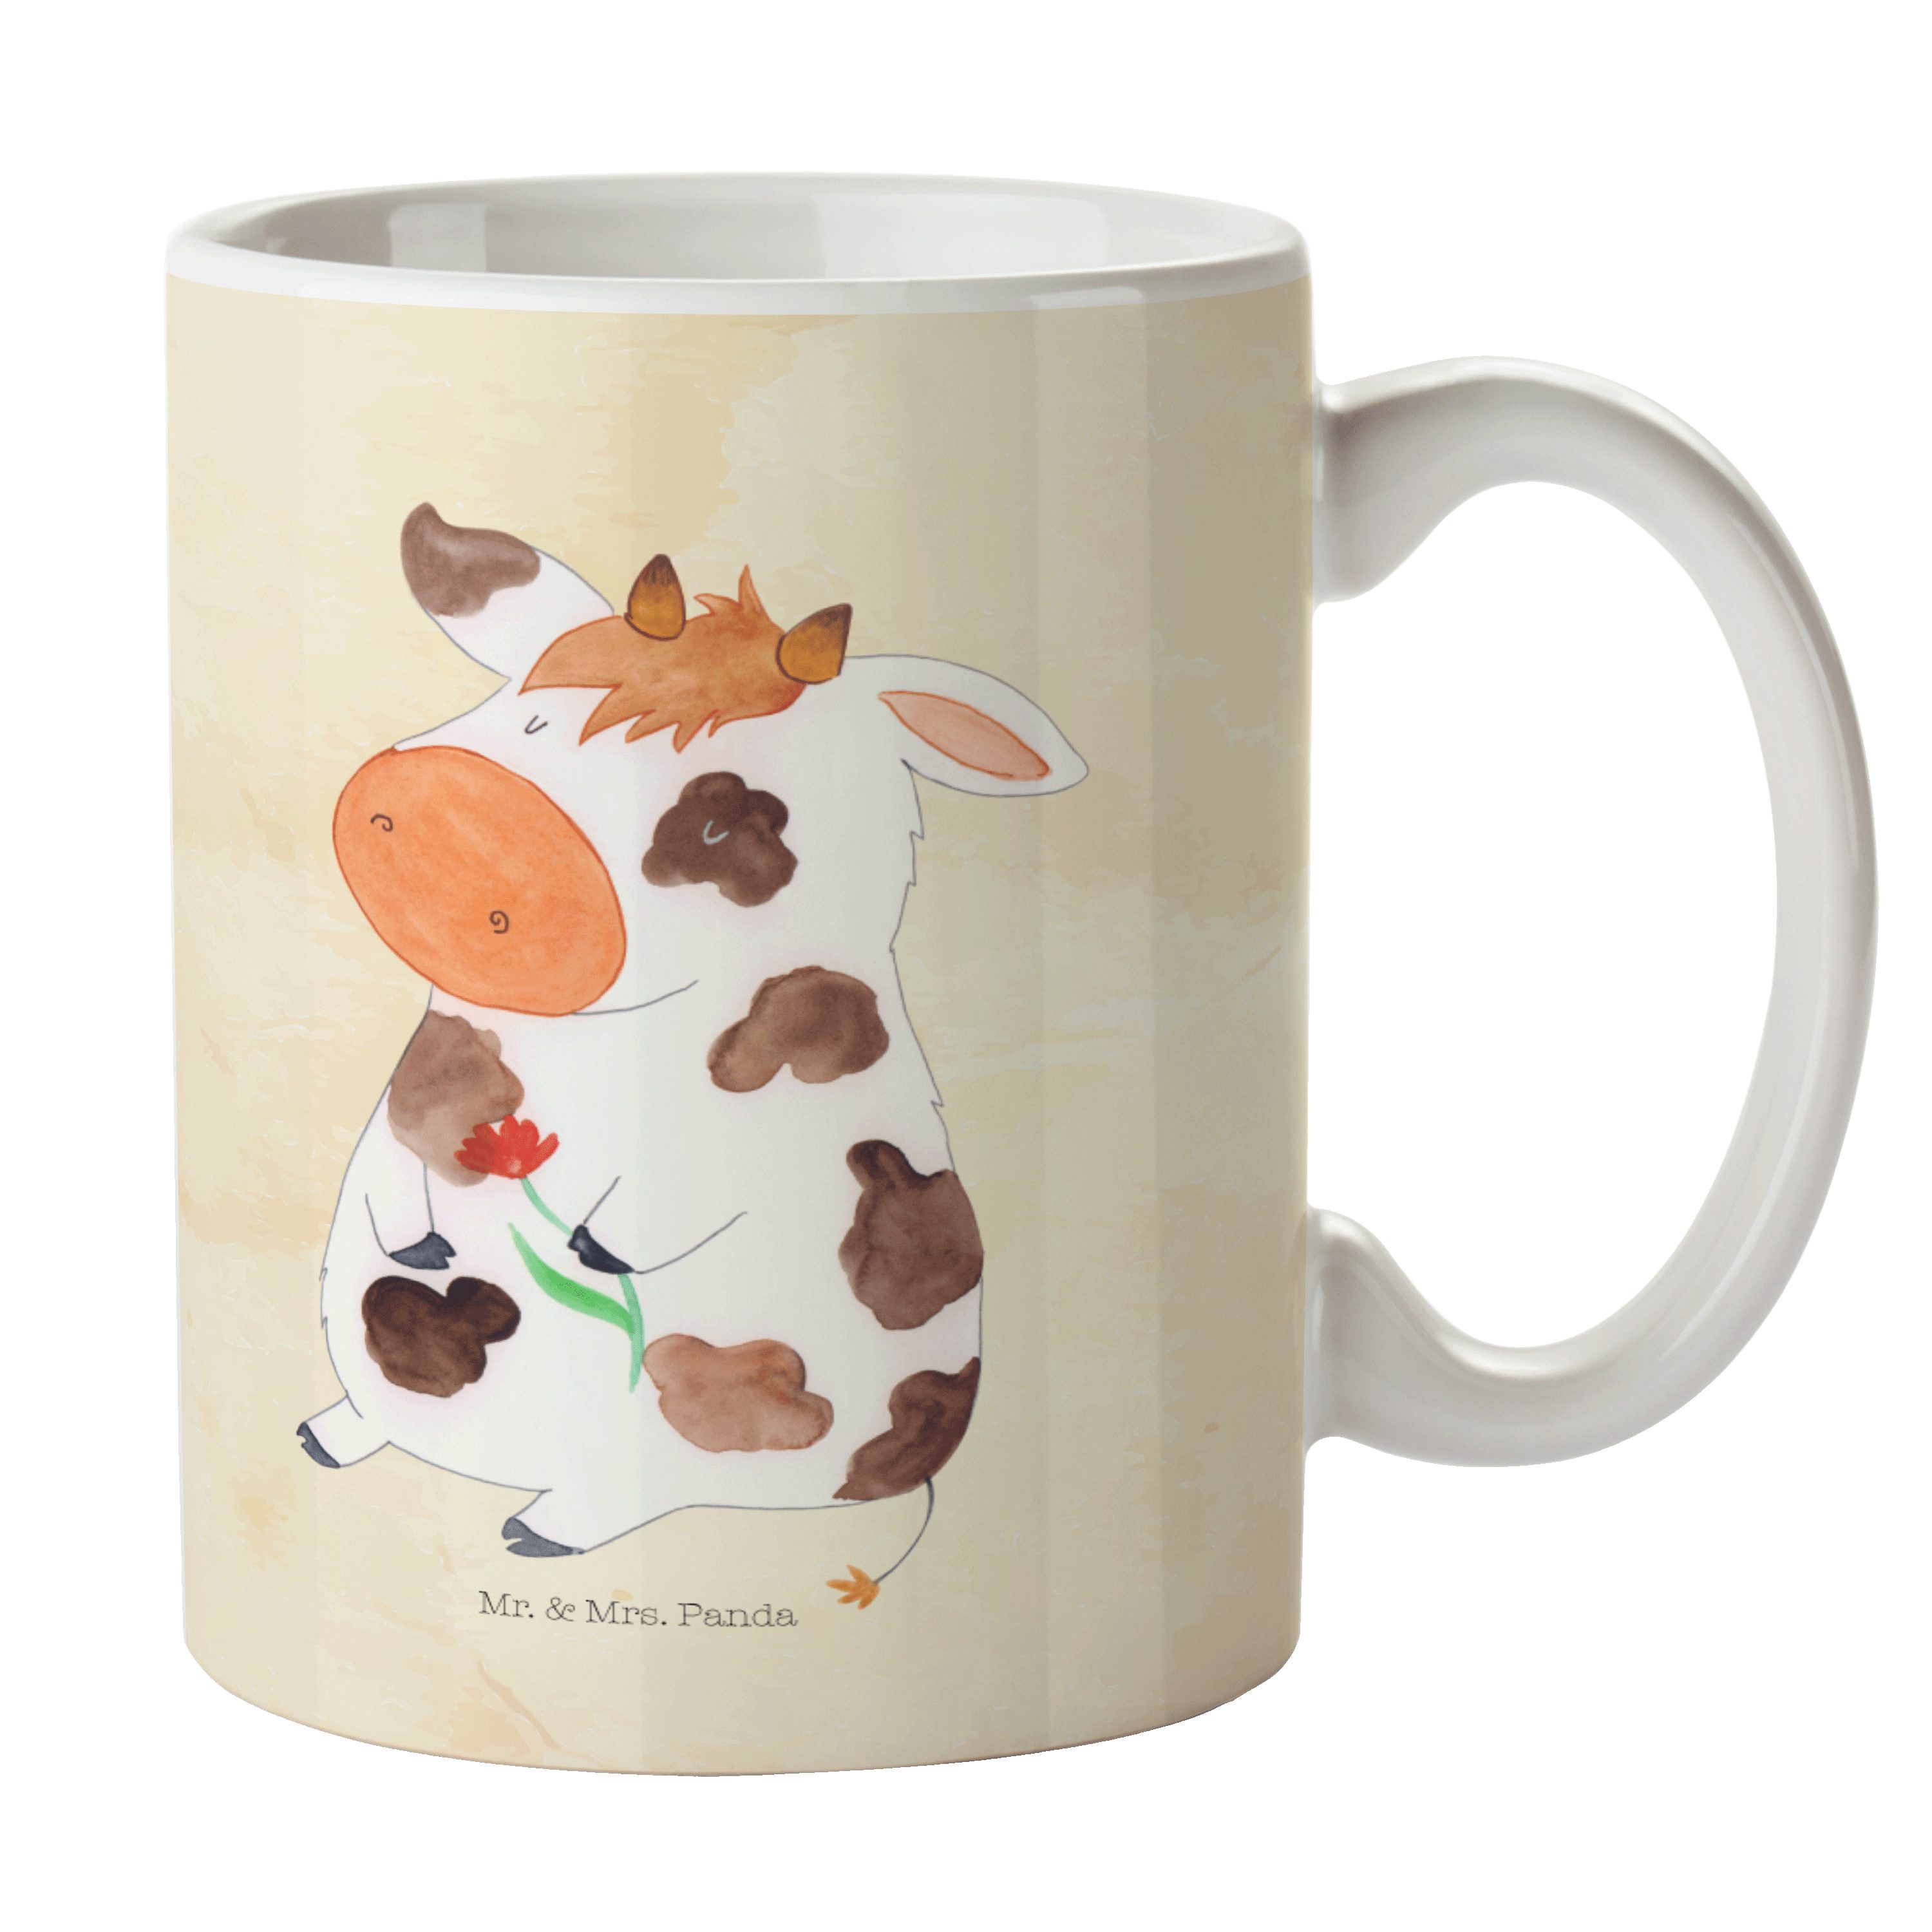 Mr. & Mrs. Panda Tasse Kuh - Vintage - Geschenk, Tasse, Landwirt, Kaffeebecher, Landwirtin, Keramik